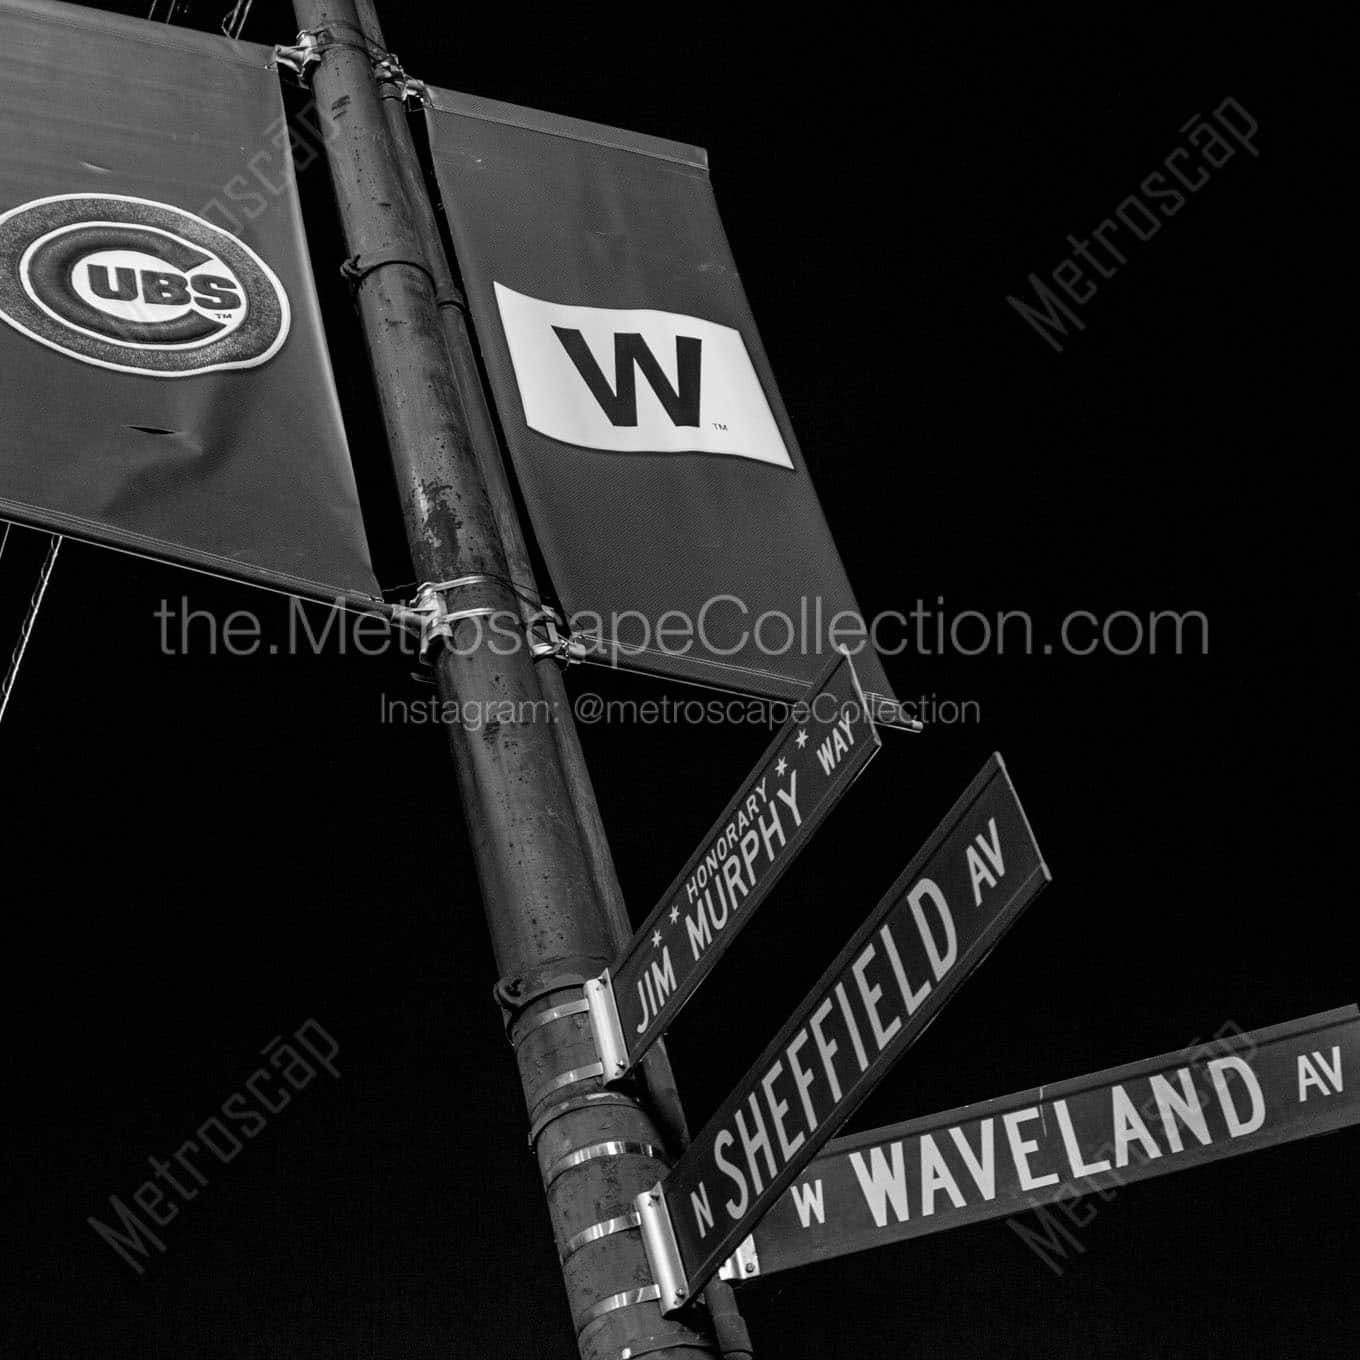 sheffield and waveland street signs Black & White Wall Art